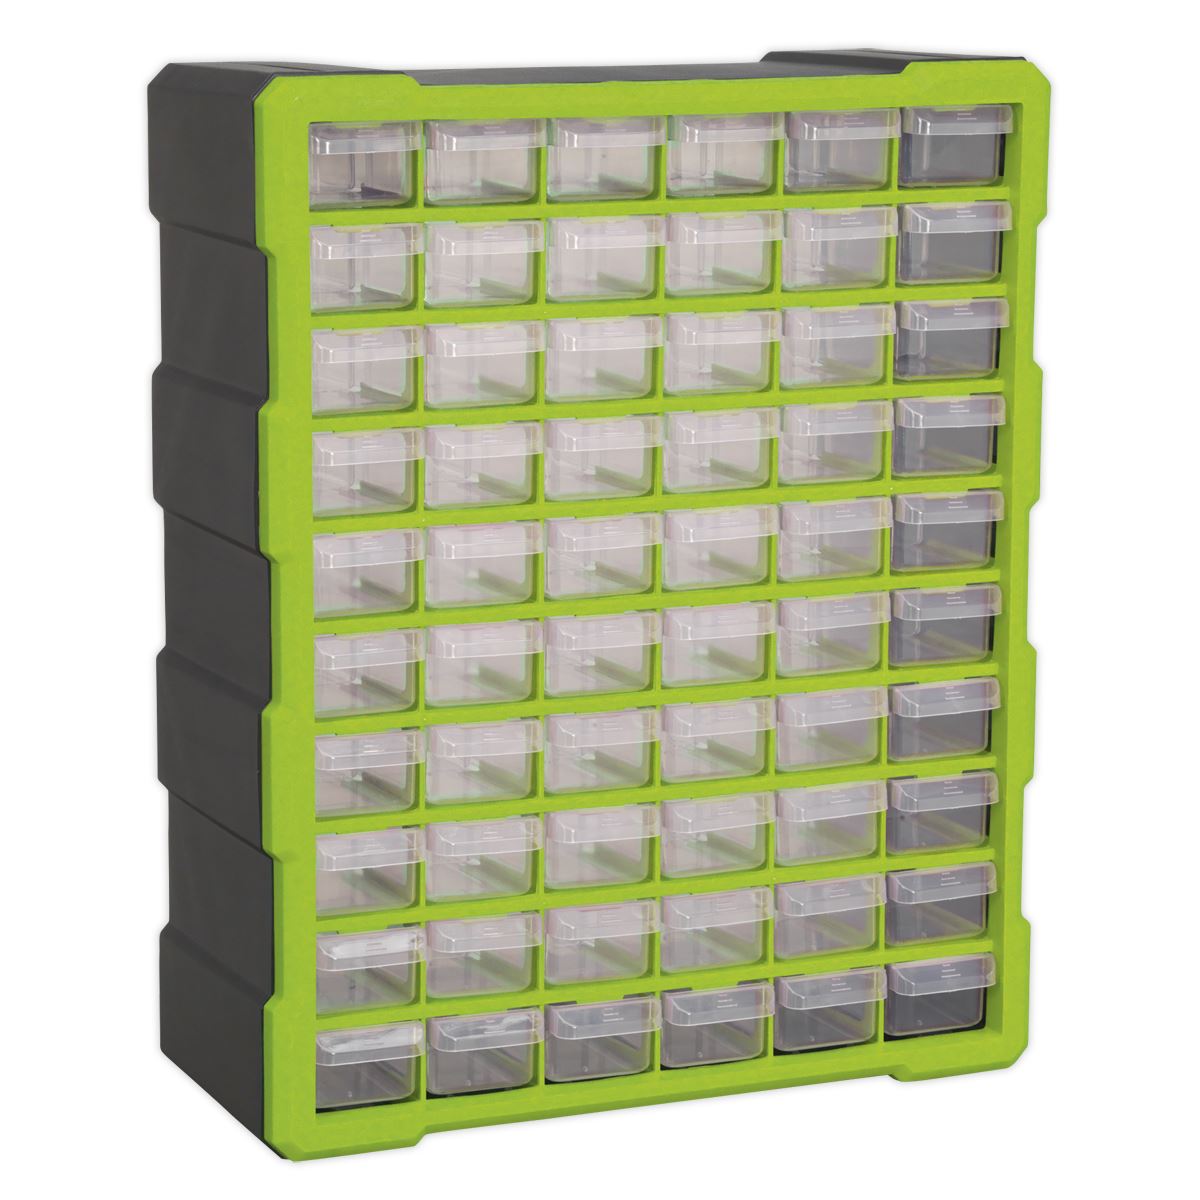 Sealey Cabinet Box 60 Drawer - Green/Black